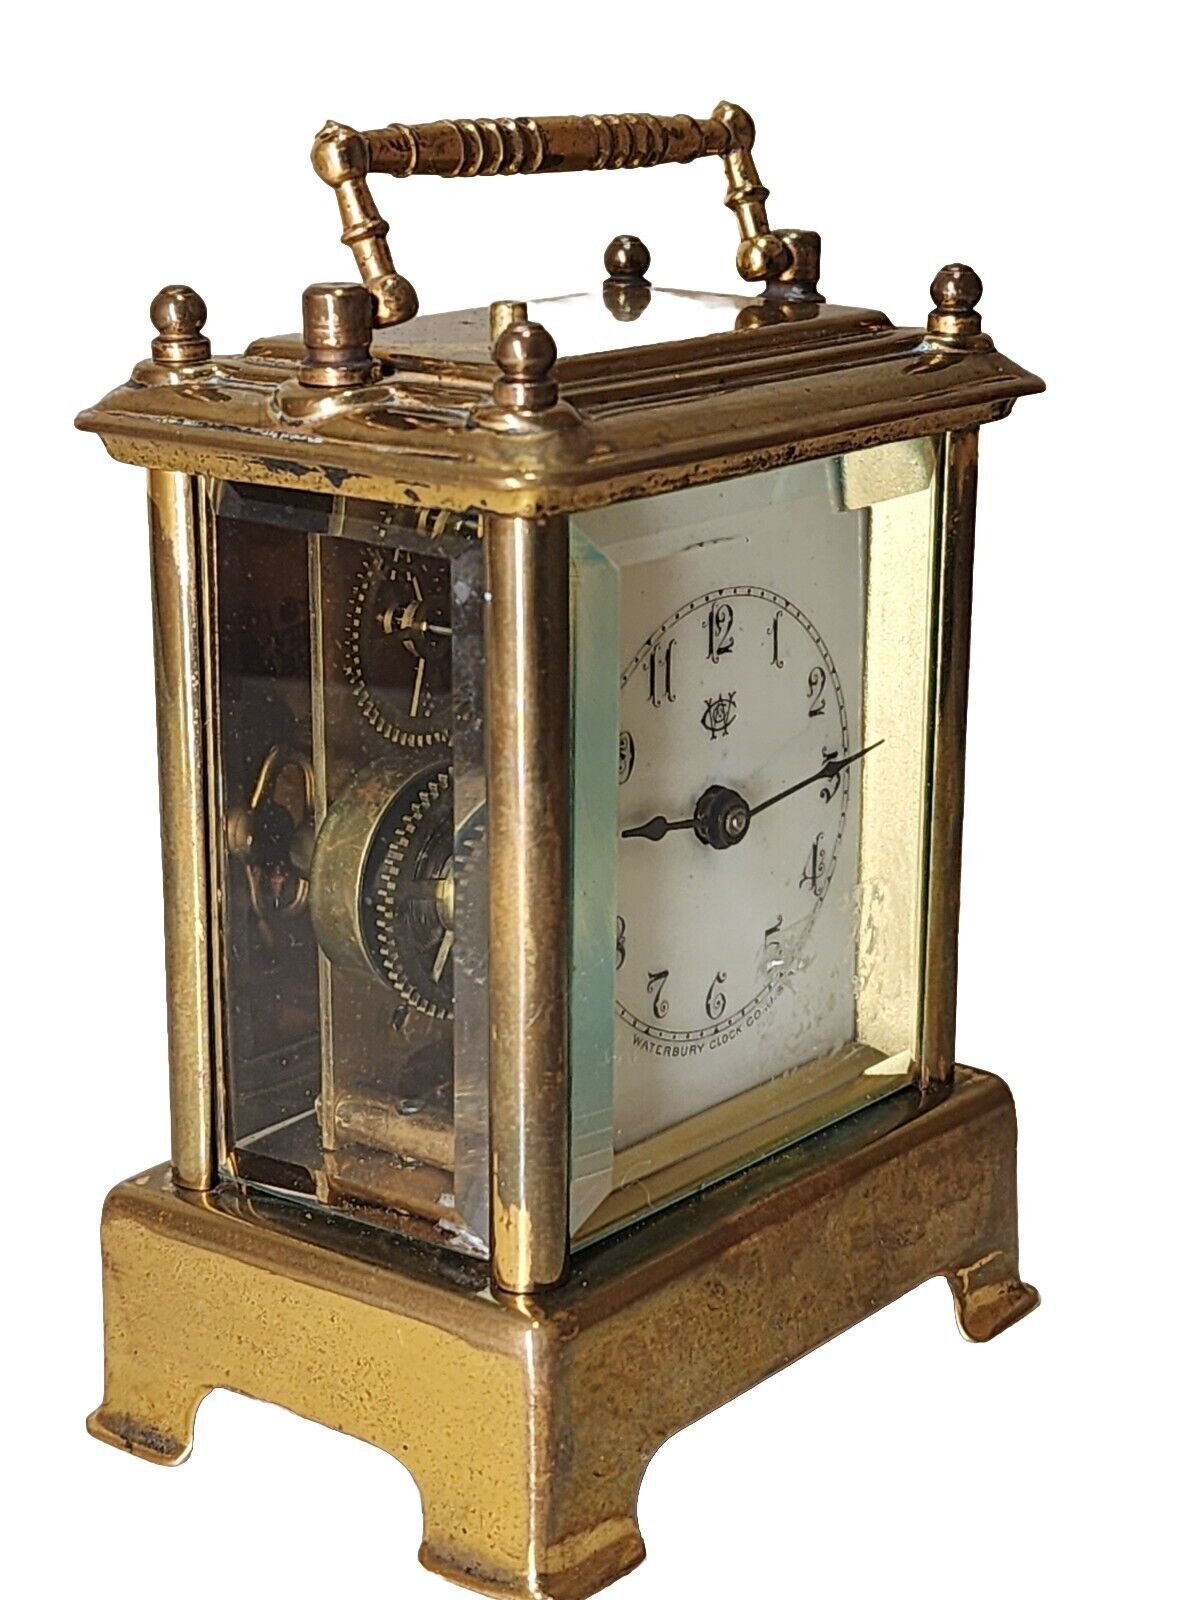 Antique Rare Waterbury Brass Repeater Alarm Carriage Clock (As Is) - 1891 Circa